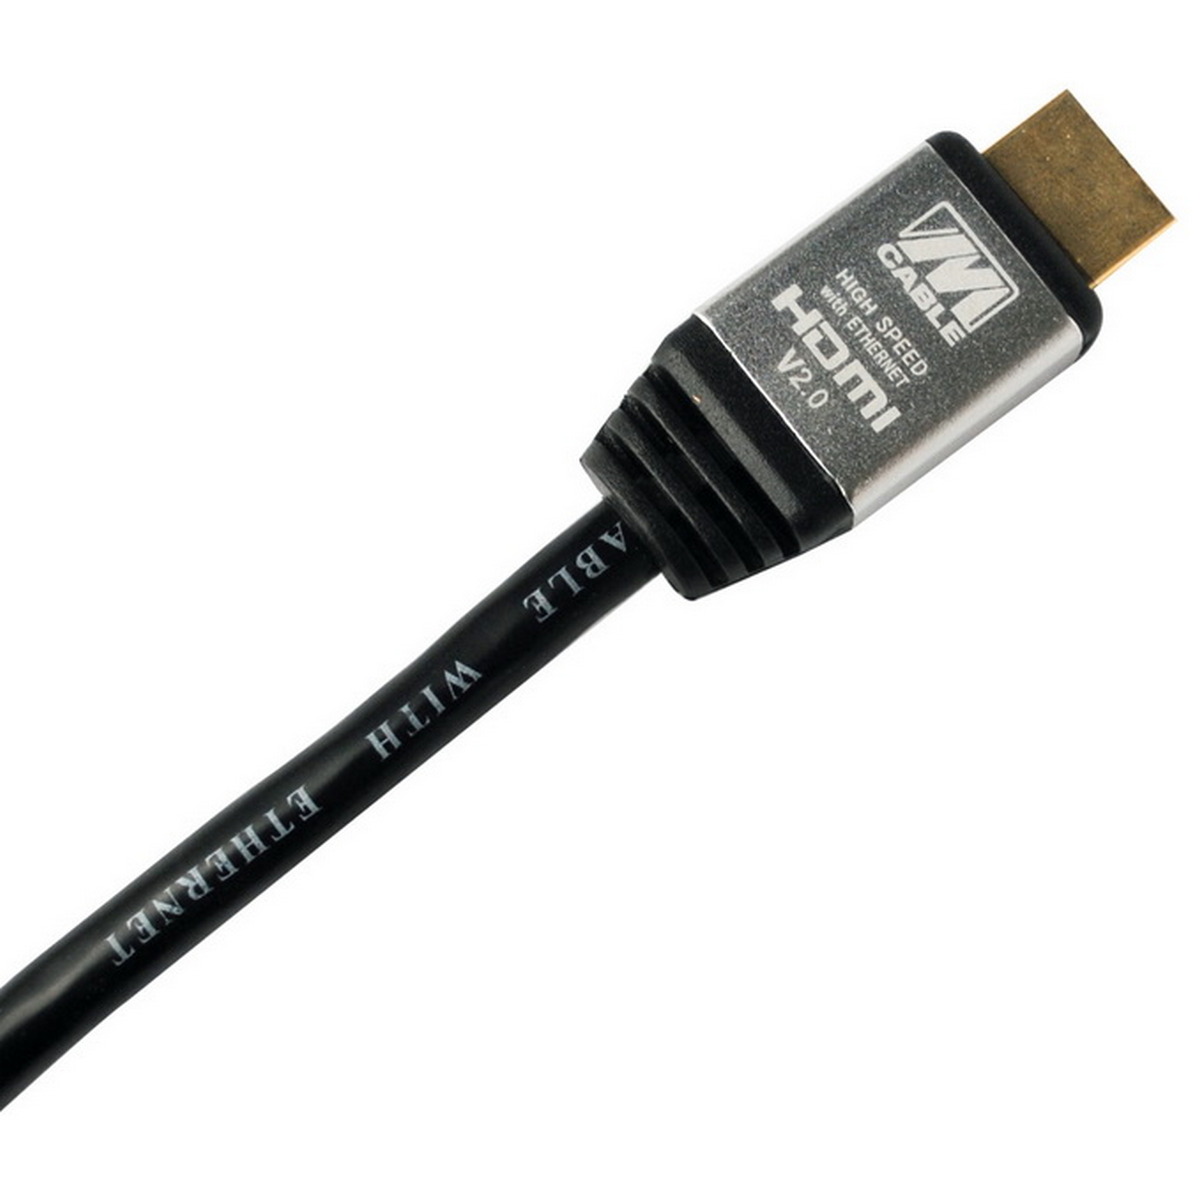 Mcable HDMI Cable Version 2.0 (3M) M-HDMI-HSWE-E 3M 